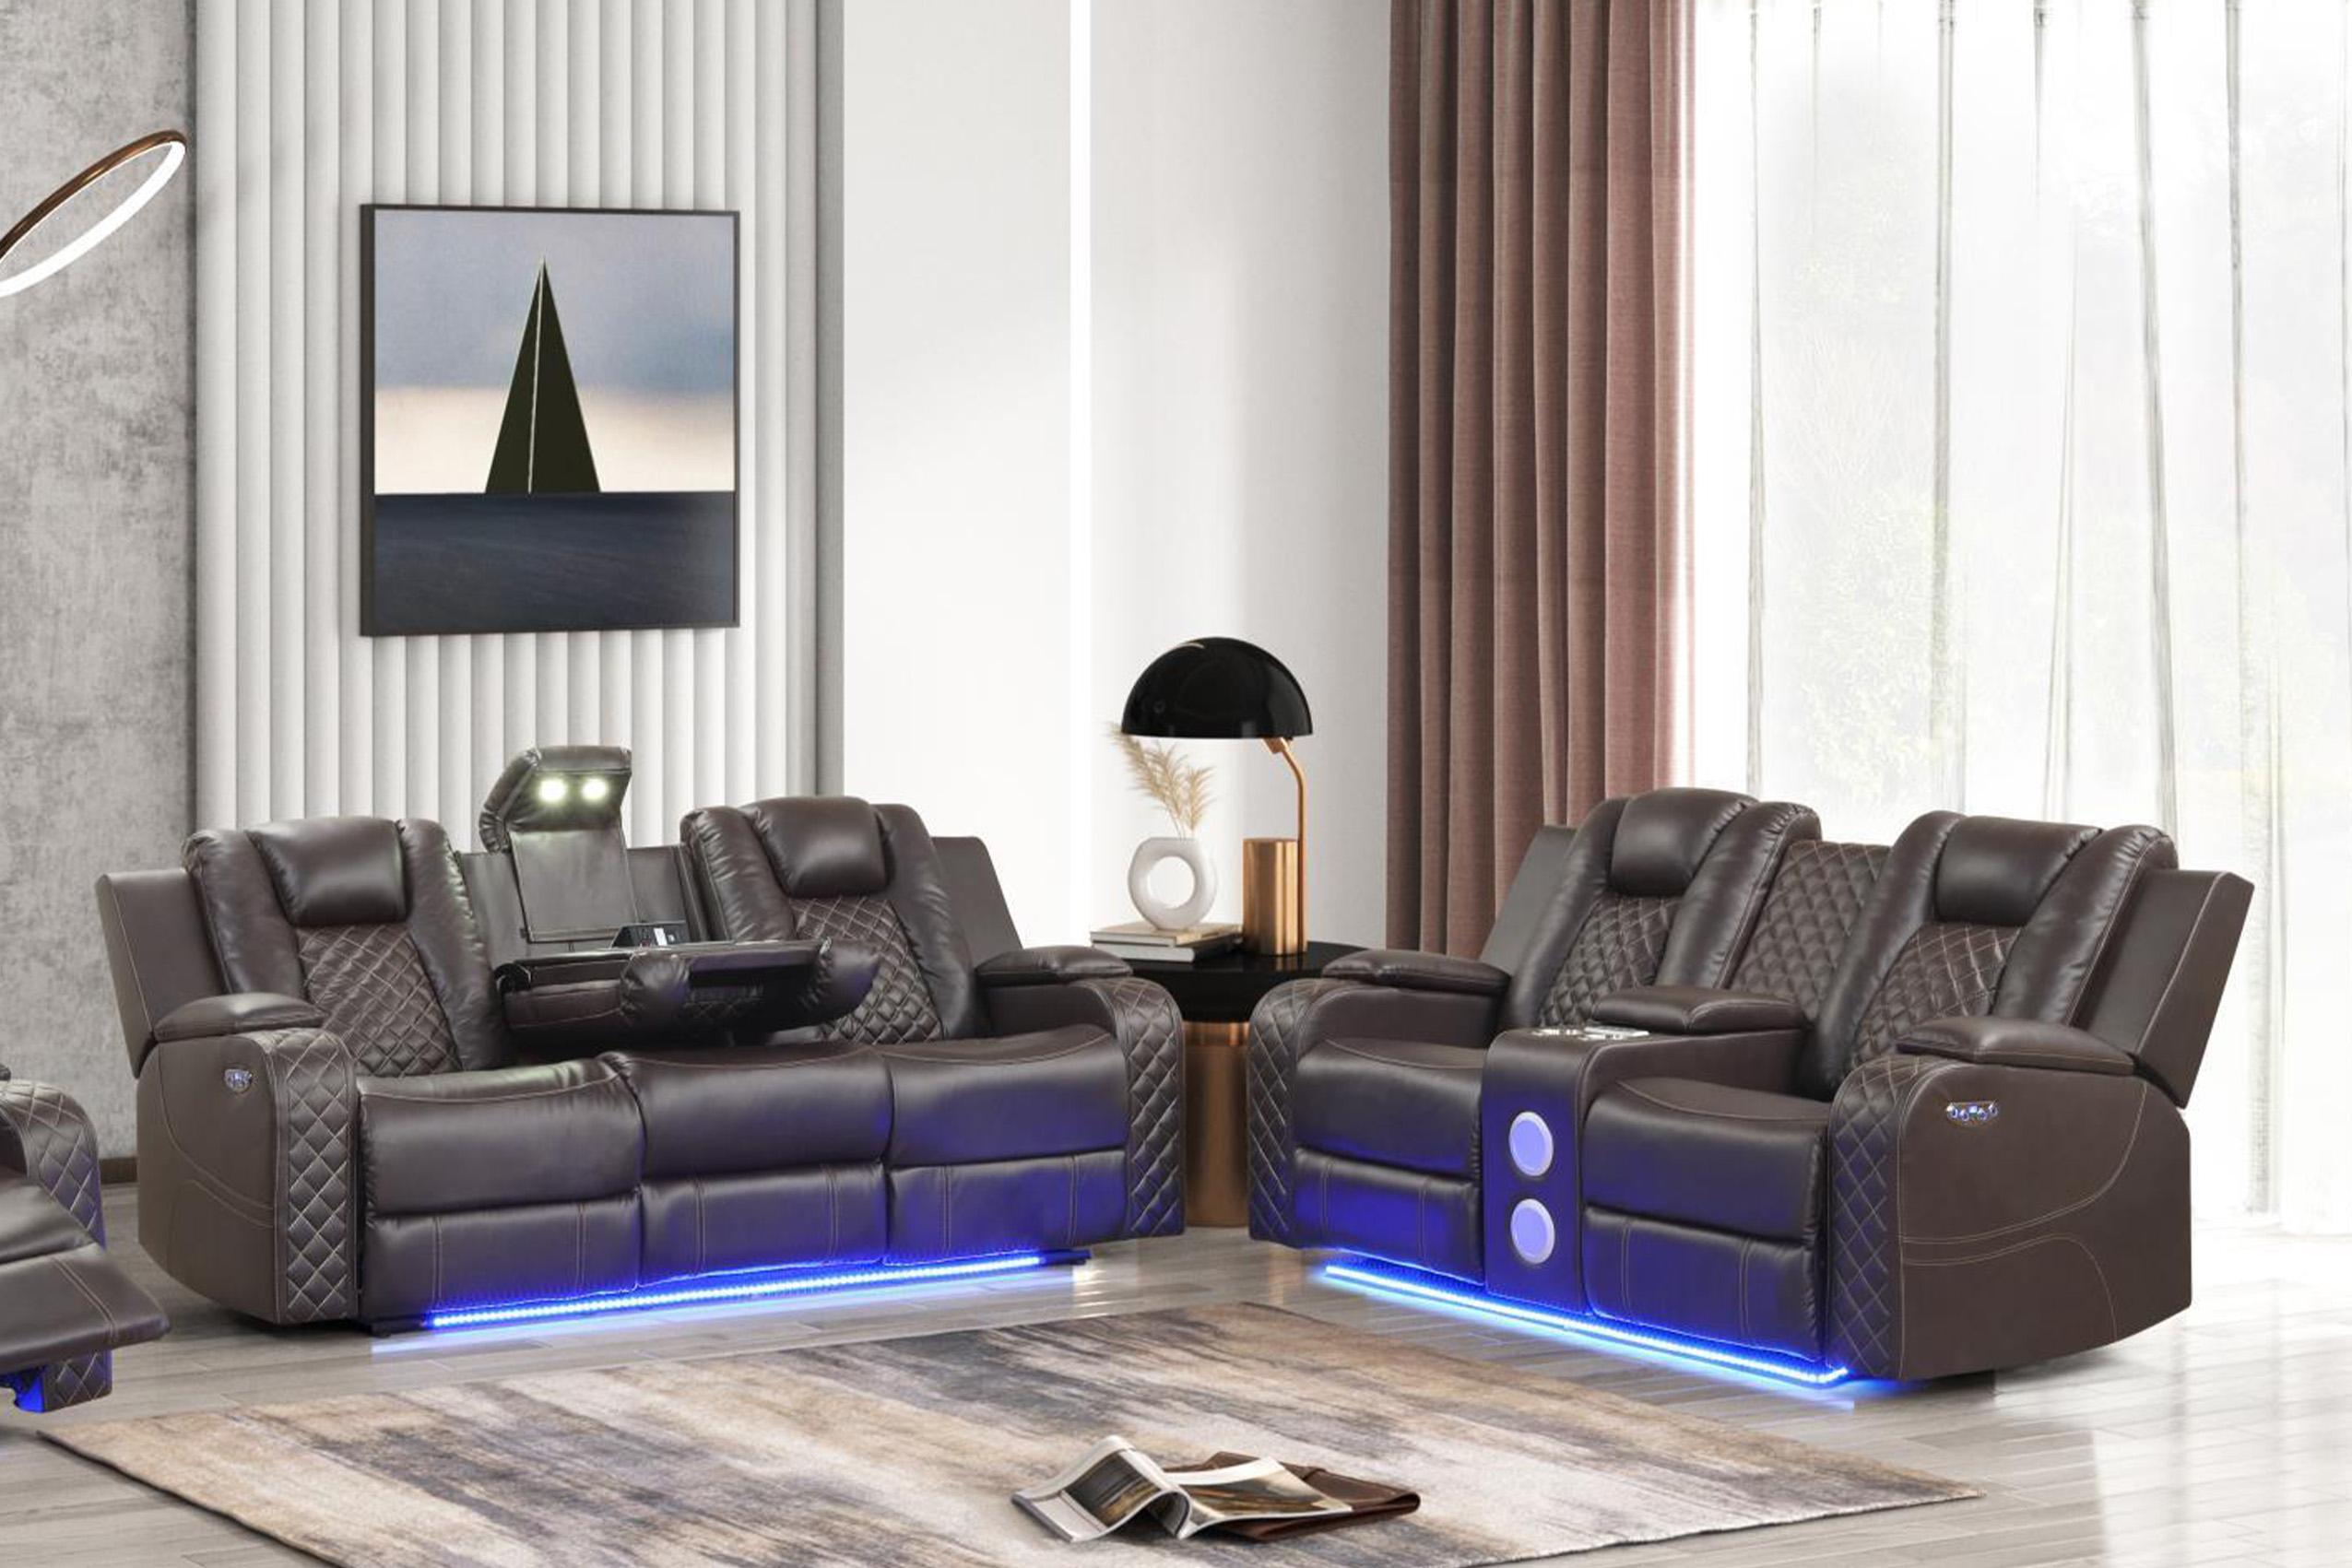 

    
Galaxy Home Furniture BENZ Recliner Loveseat Brown 659436490765
